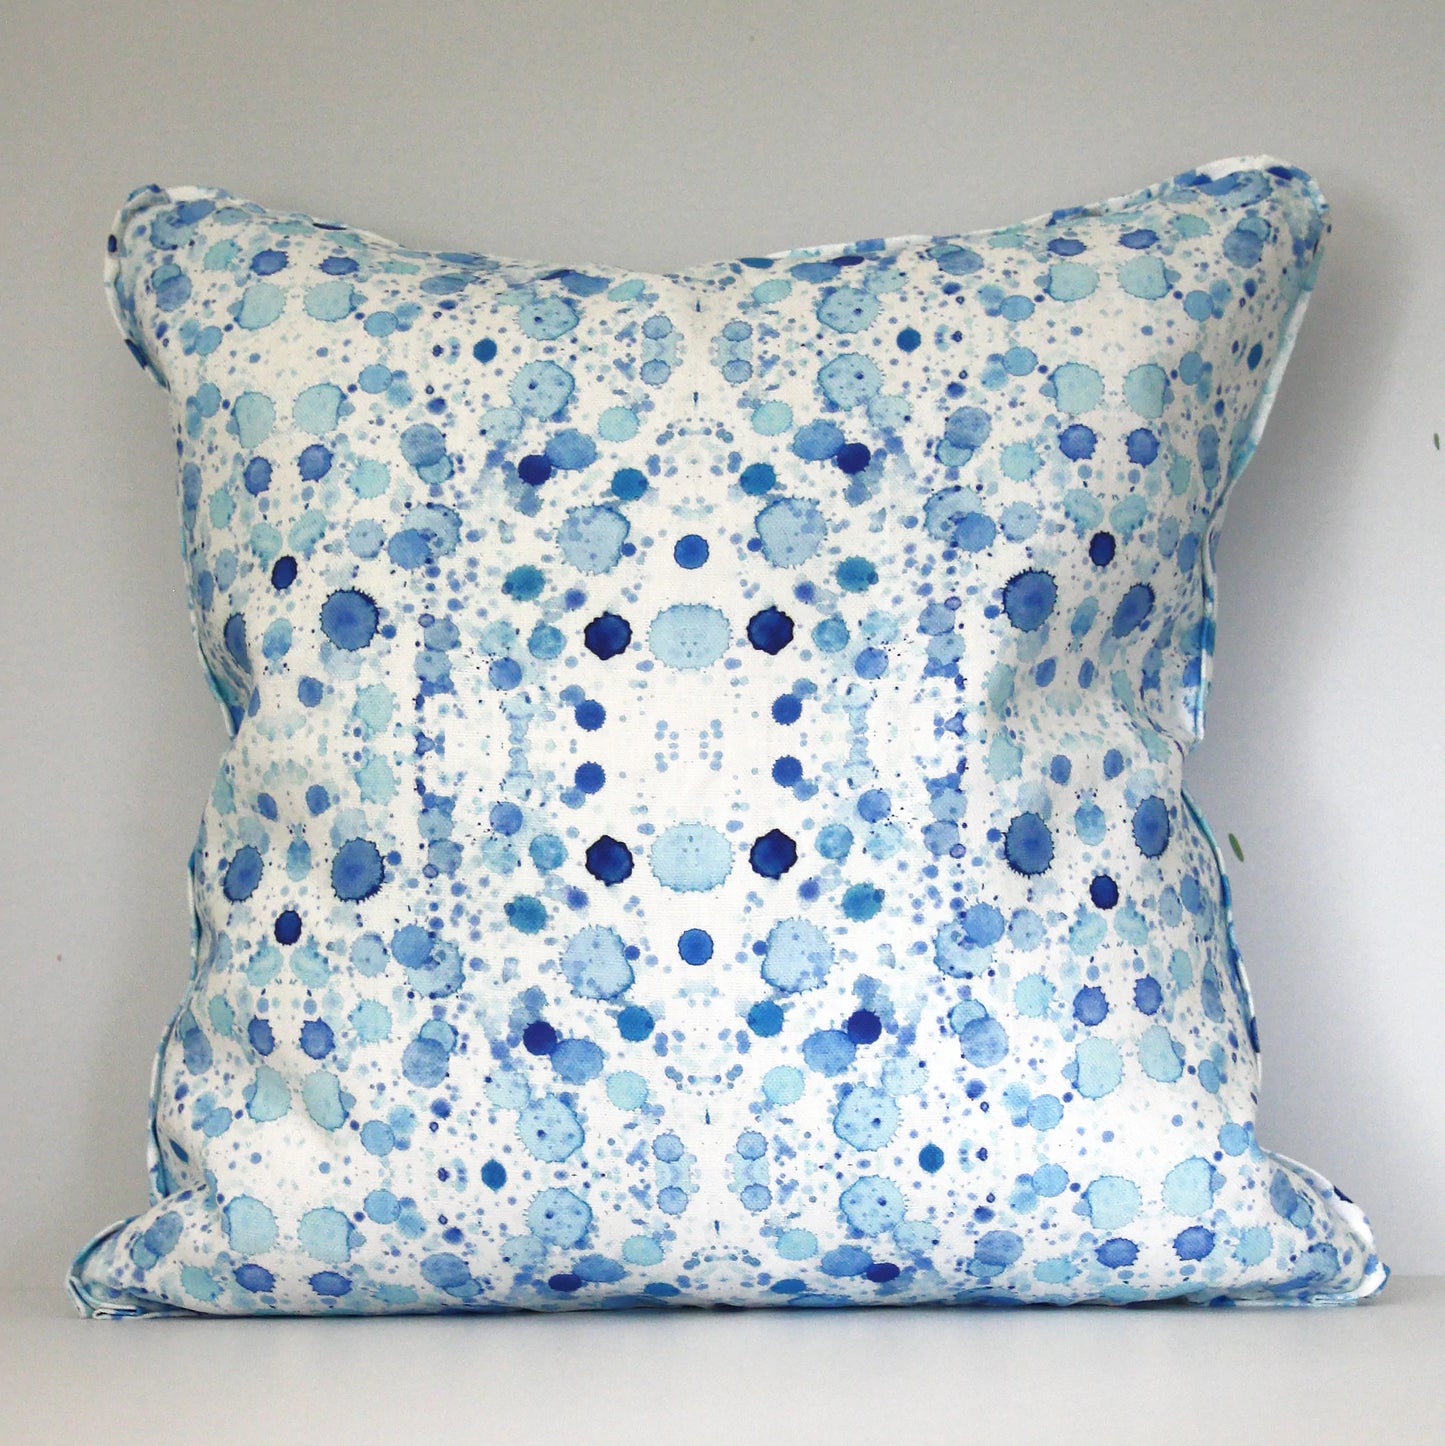 Splatter Pillow in Coastal Blue - SAMPLE